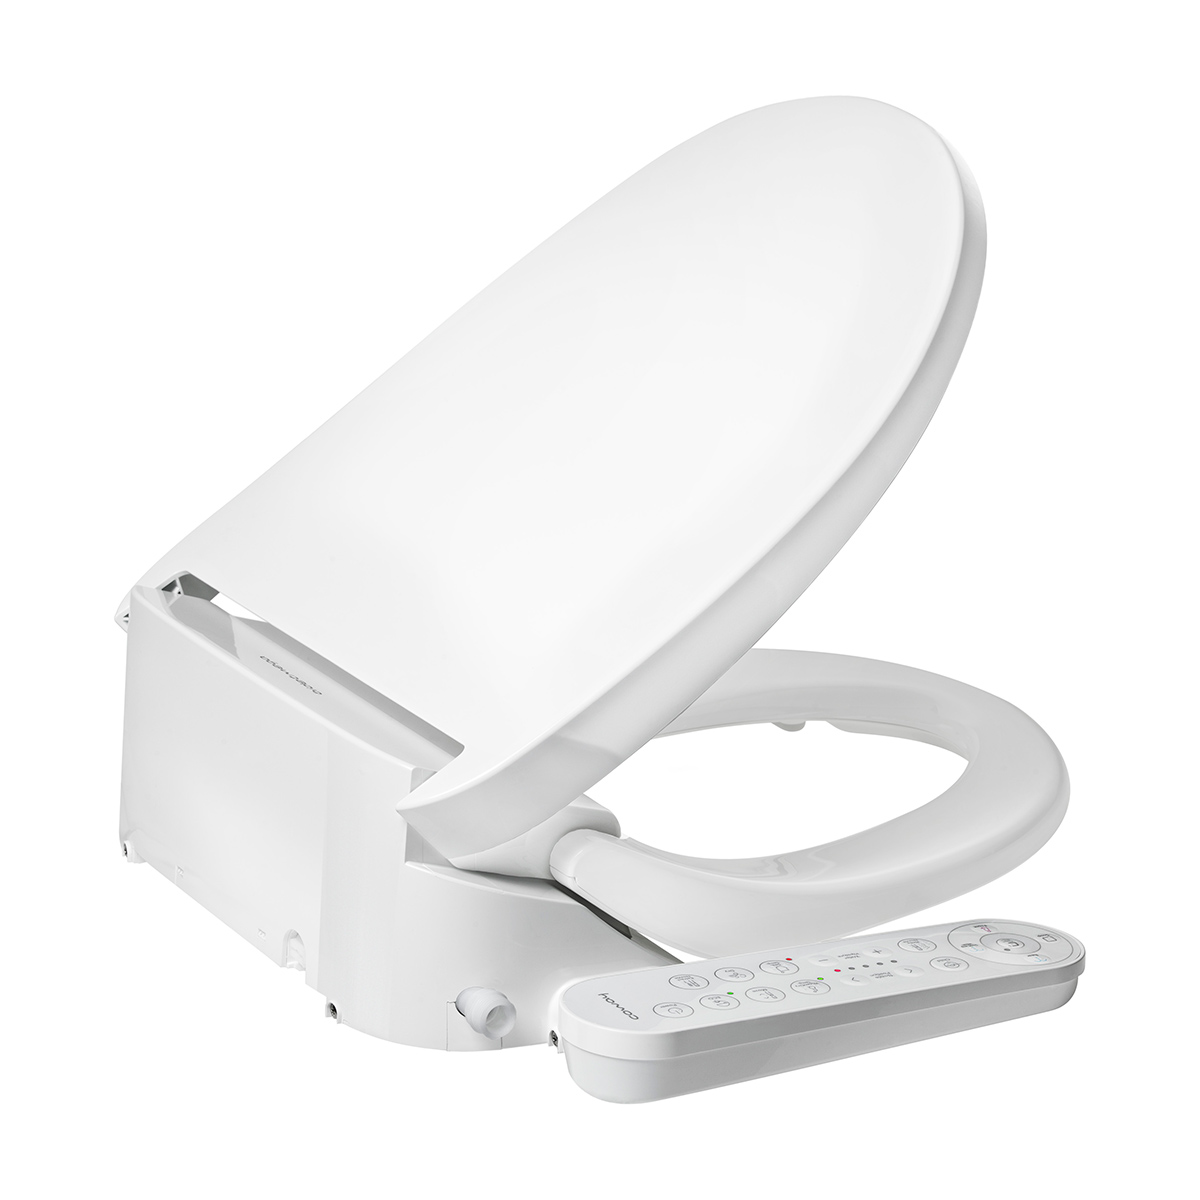 Coway Bidetmega 200 Smart Electronic Bidet Seat with Innovative i-WAVE Technology For Rounded Toilet Bowl - image 3 of 6